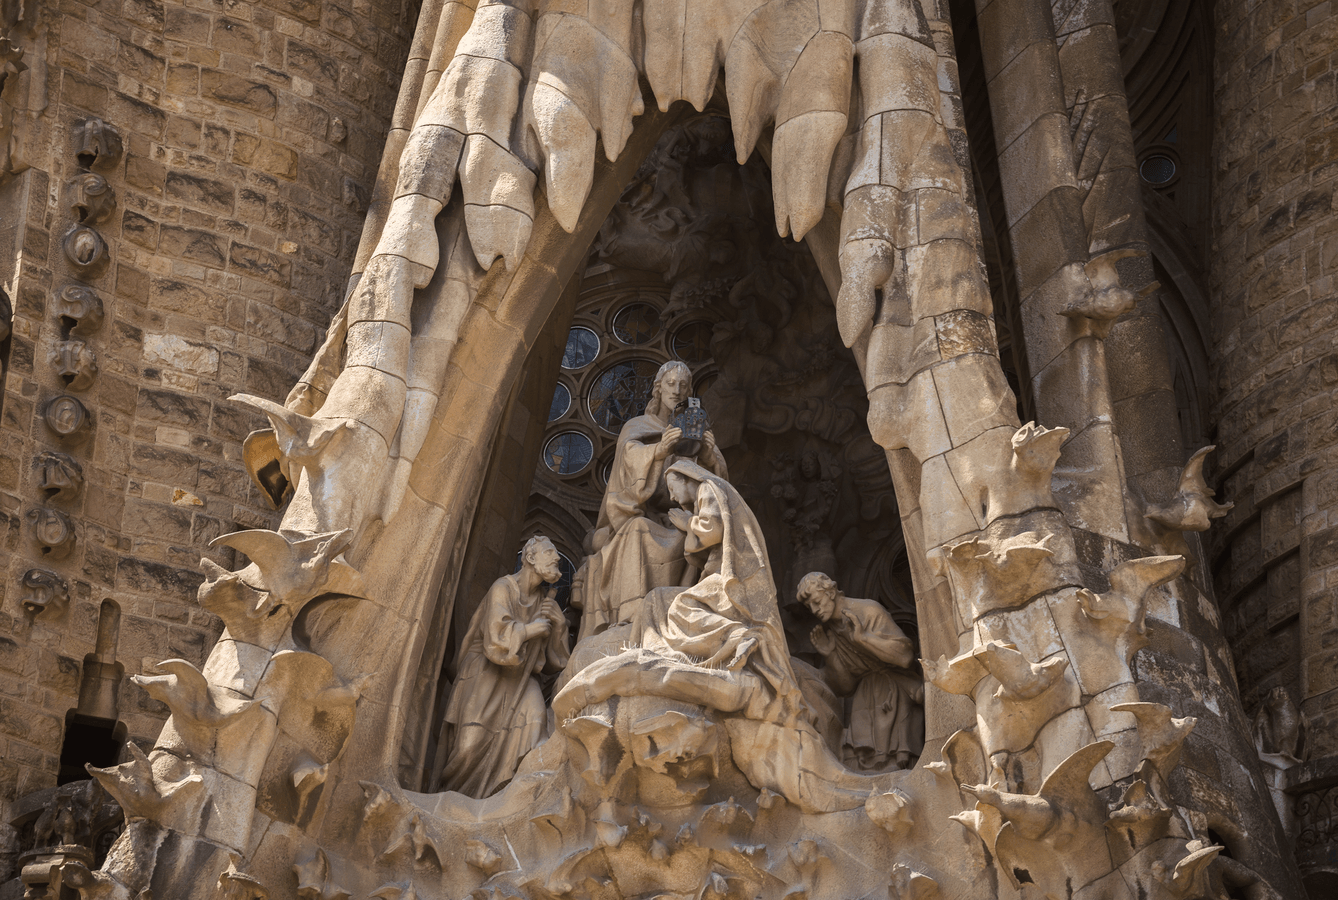 Sagrada Familia by Gaudi - Basilica in Barcelona, Spain - 137 Year Project 56